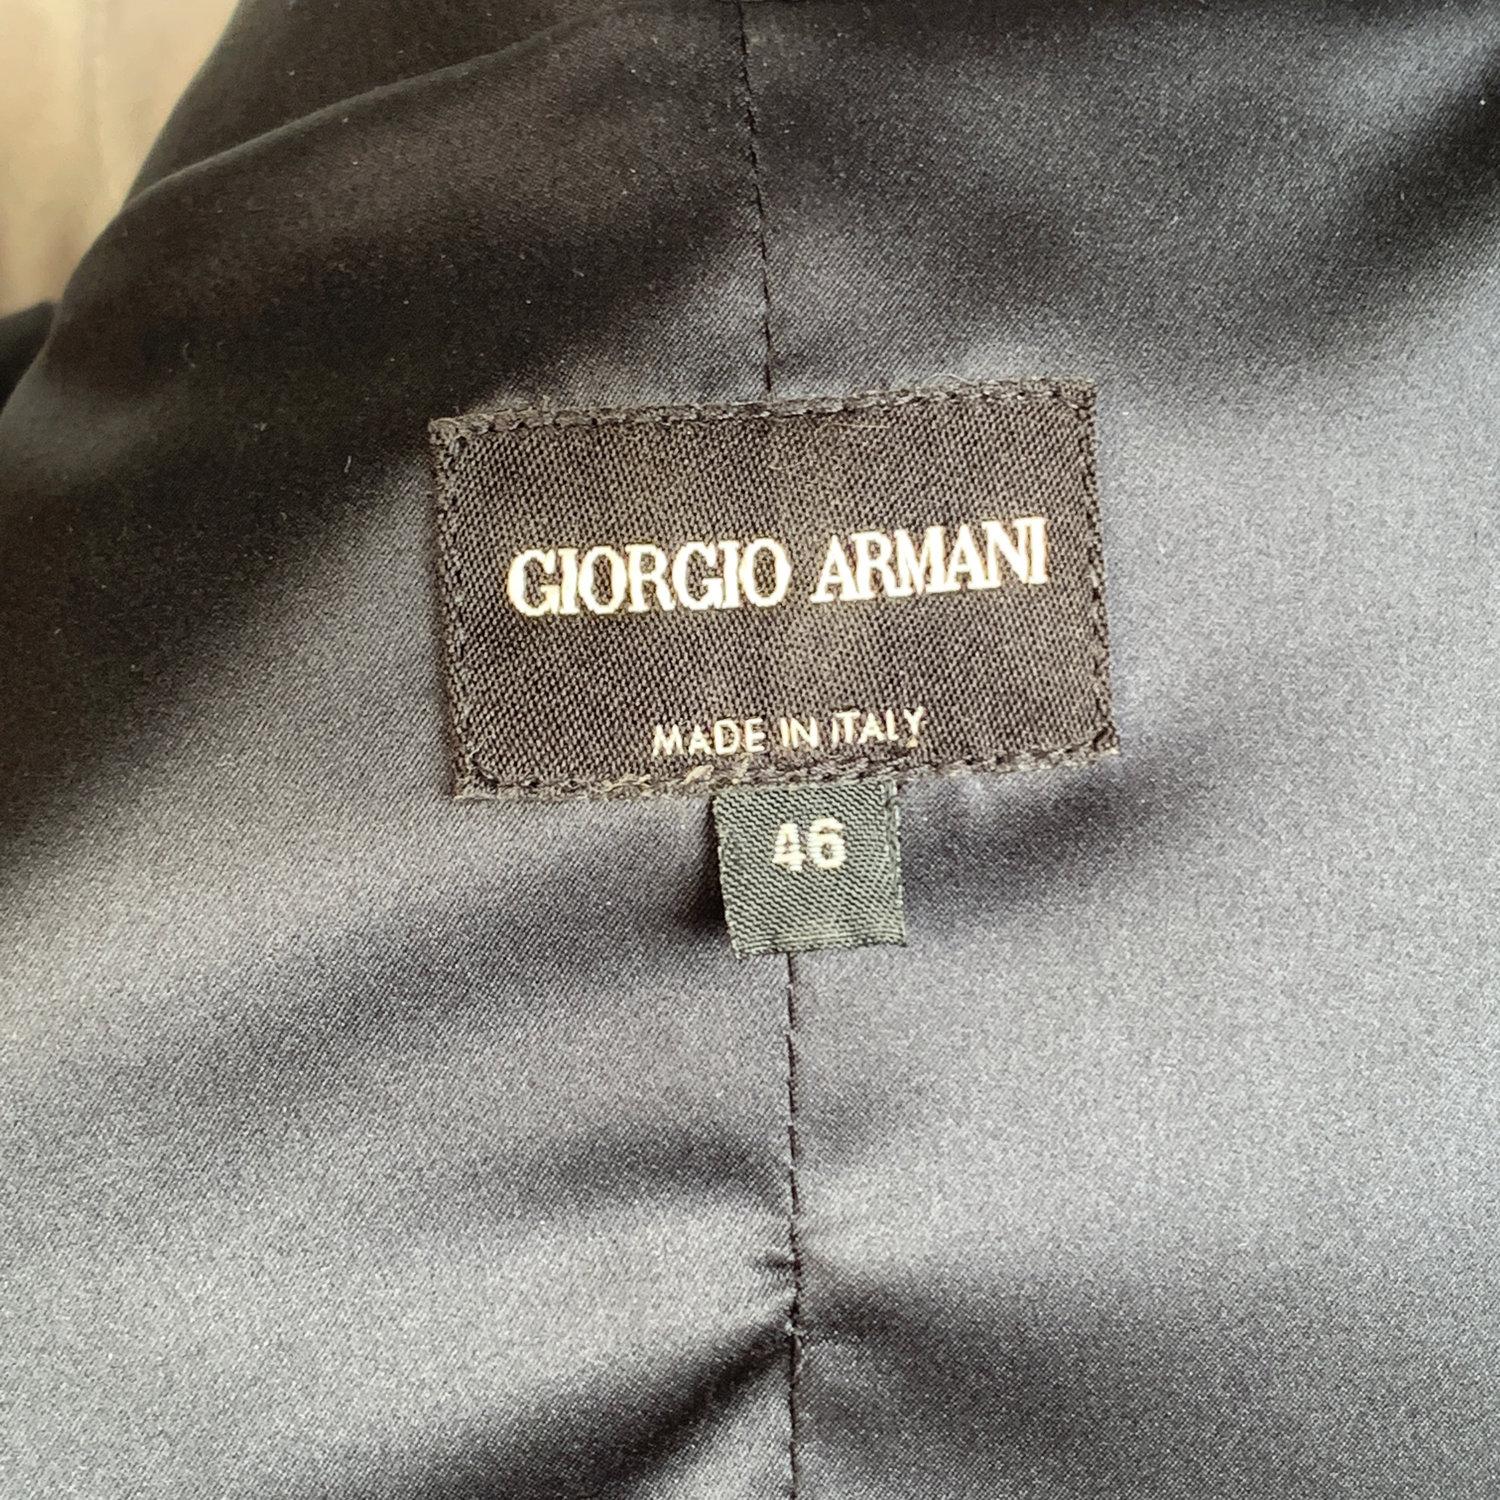 Giorgio Armani Black Label Vintage Textured Wool Blazer Jacket Size 46 3